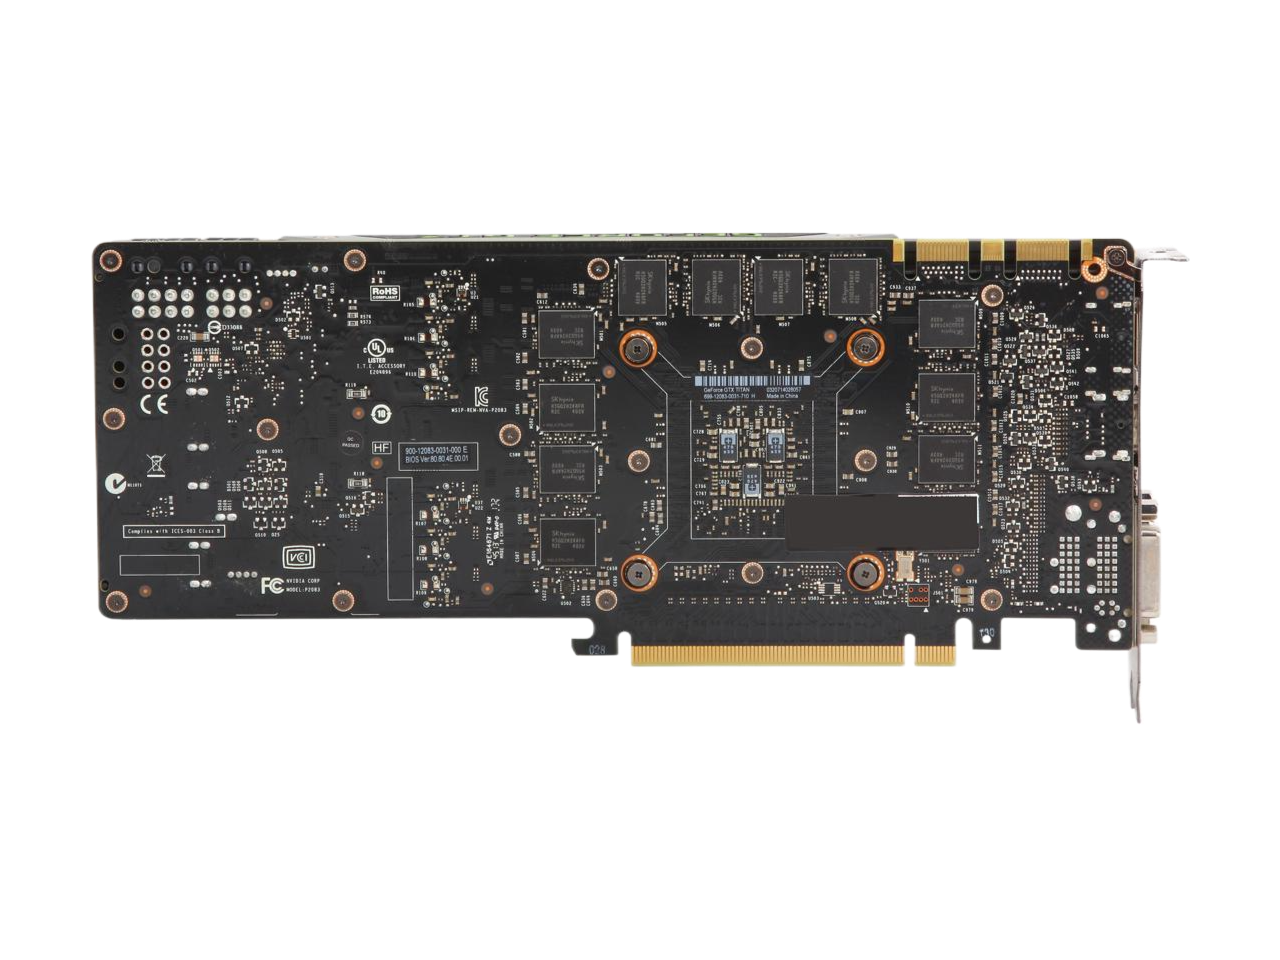 EVGA GeForce GTX TITAN BLACK Superclocked 6GB 384-Bit GDDR5 PCI Express 3.0 SLI Support G-SYNC Support Video Card 06G-P4-3791-KR